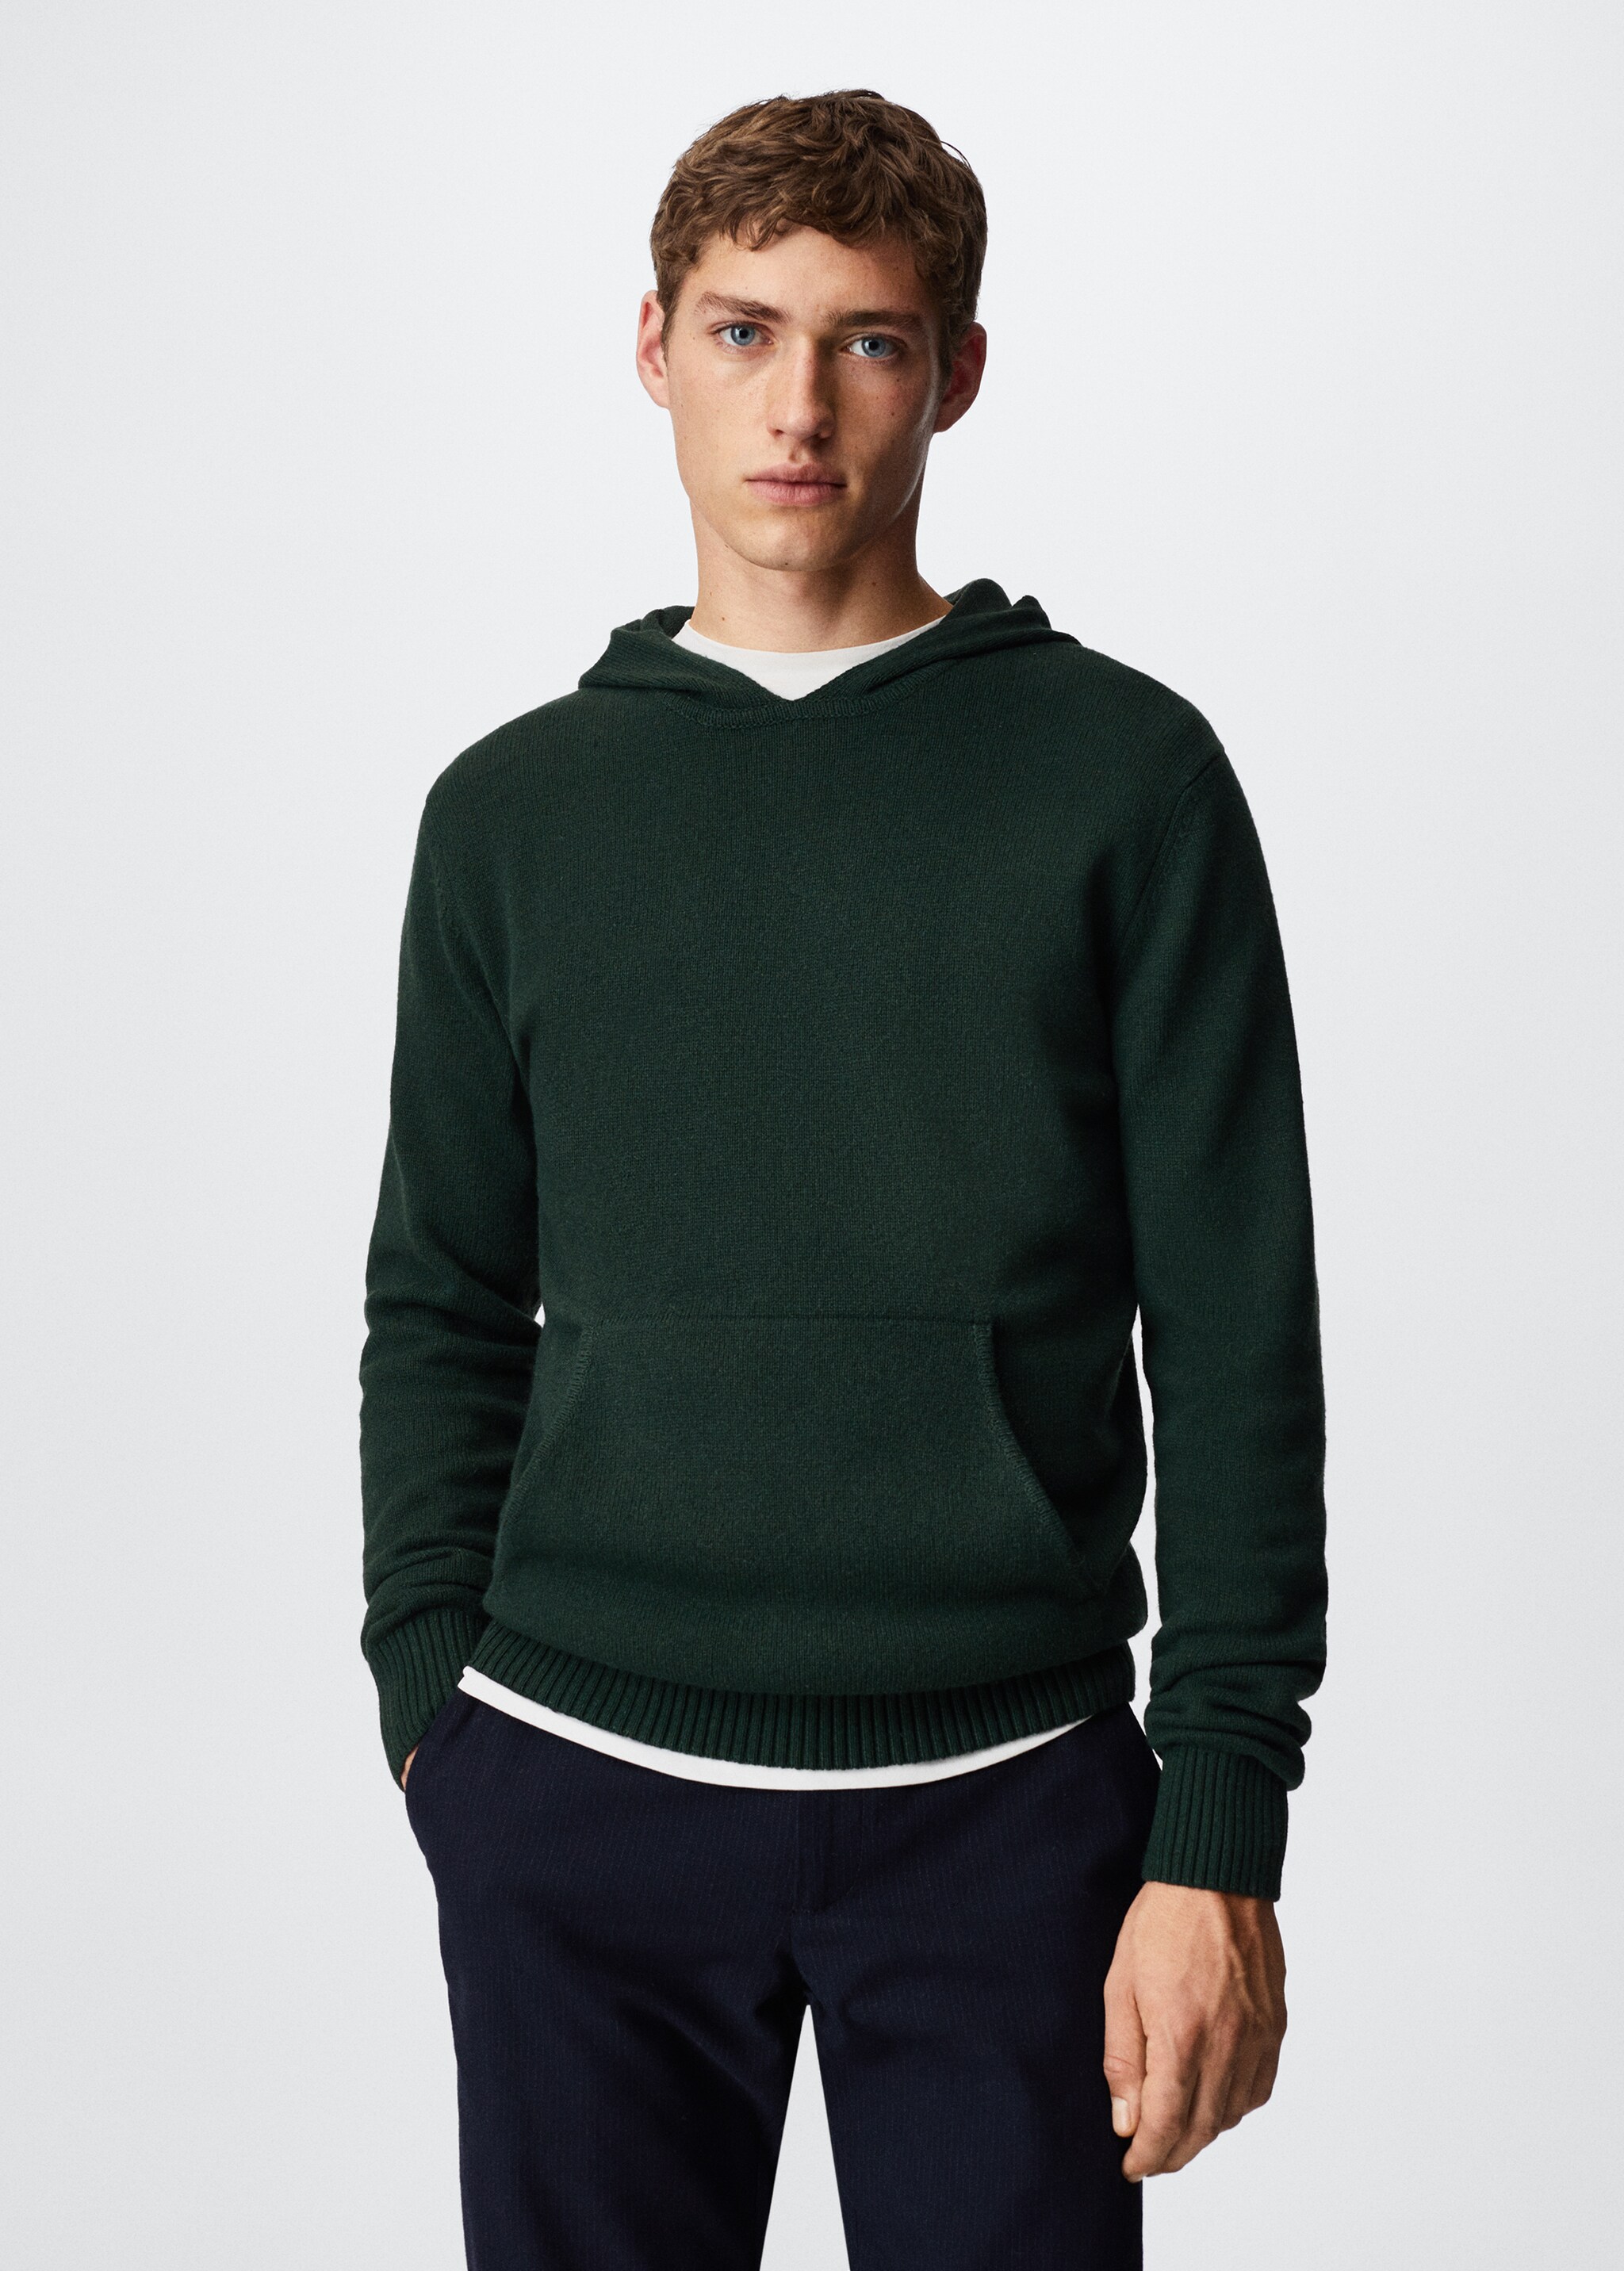 Hood wool-blend sweater - Medium plane